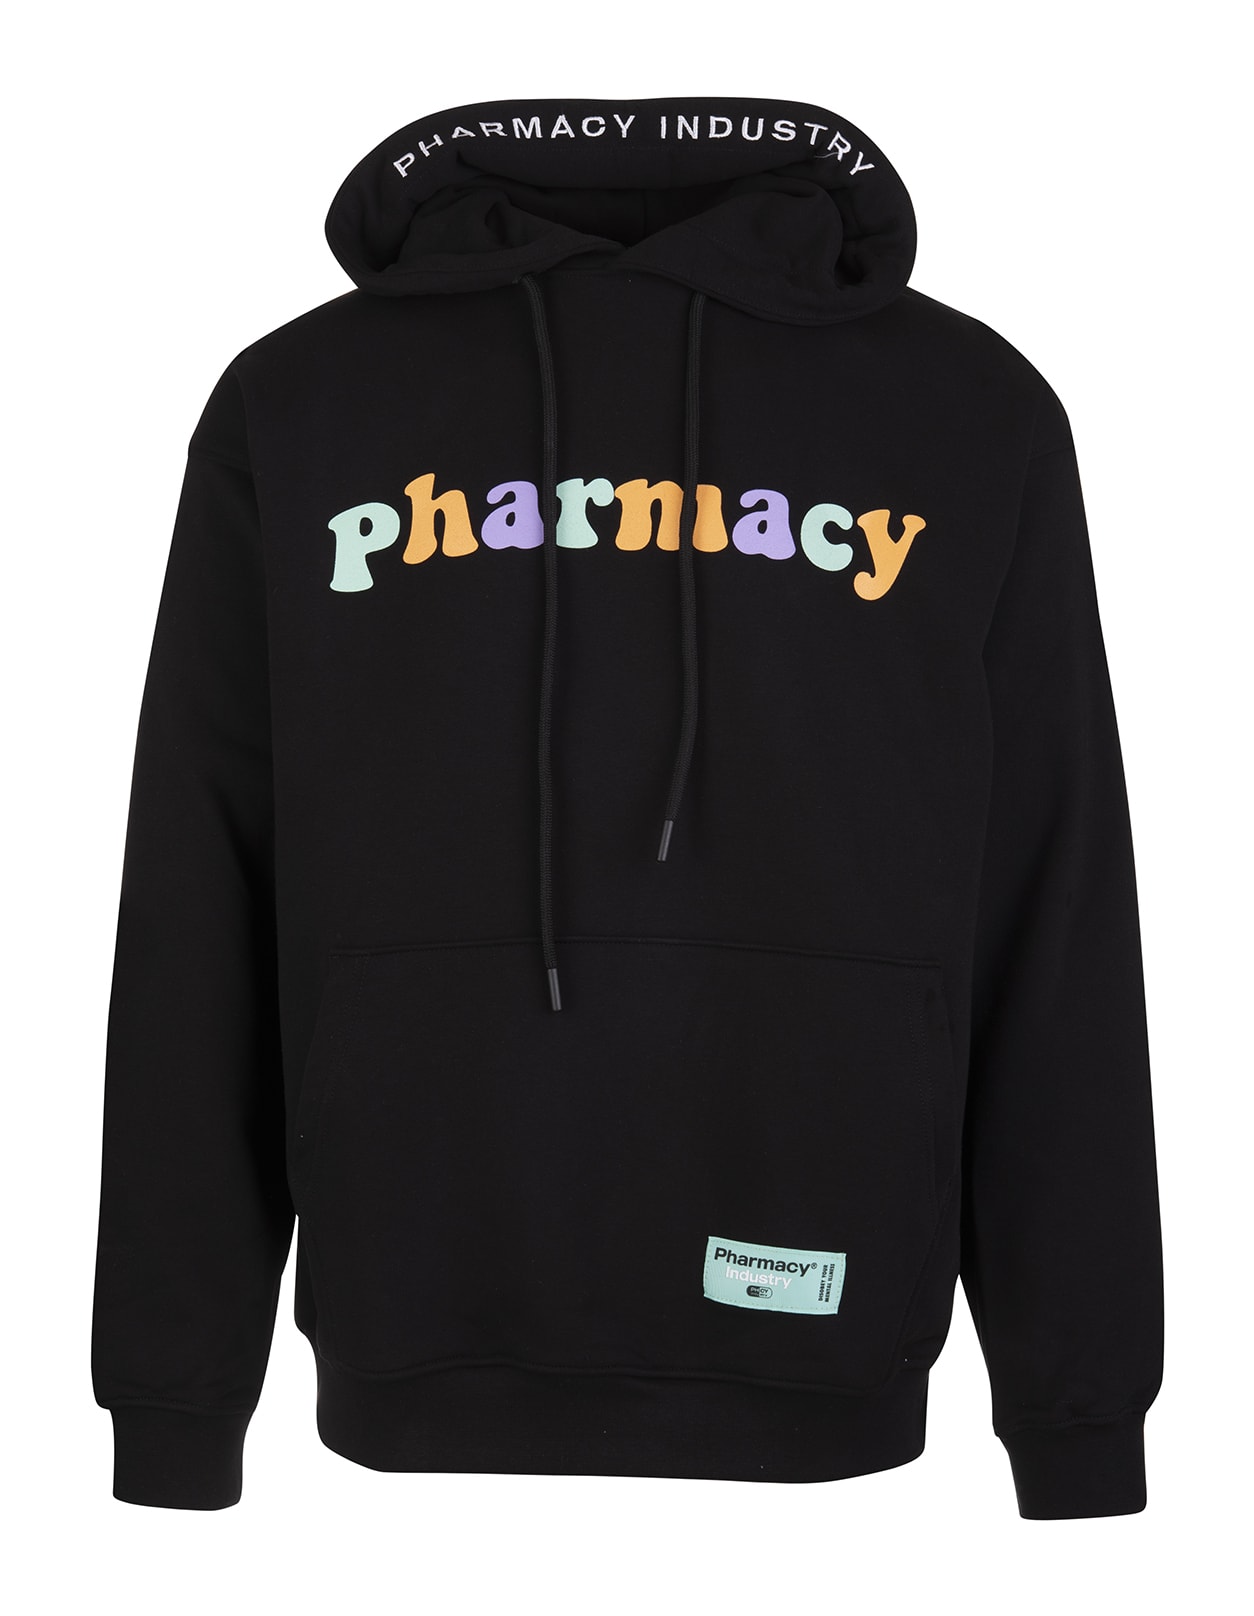 Pharmacy Industry Man Black Hoodie With Multicolored Pharmacy Print